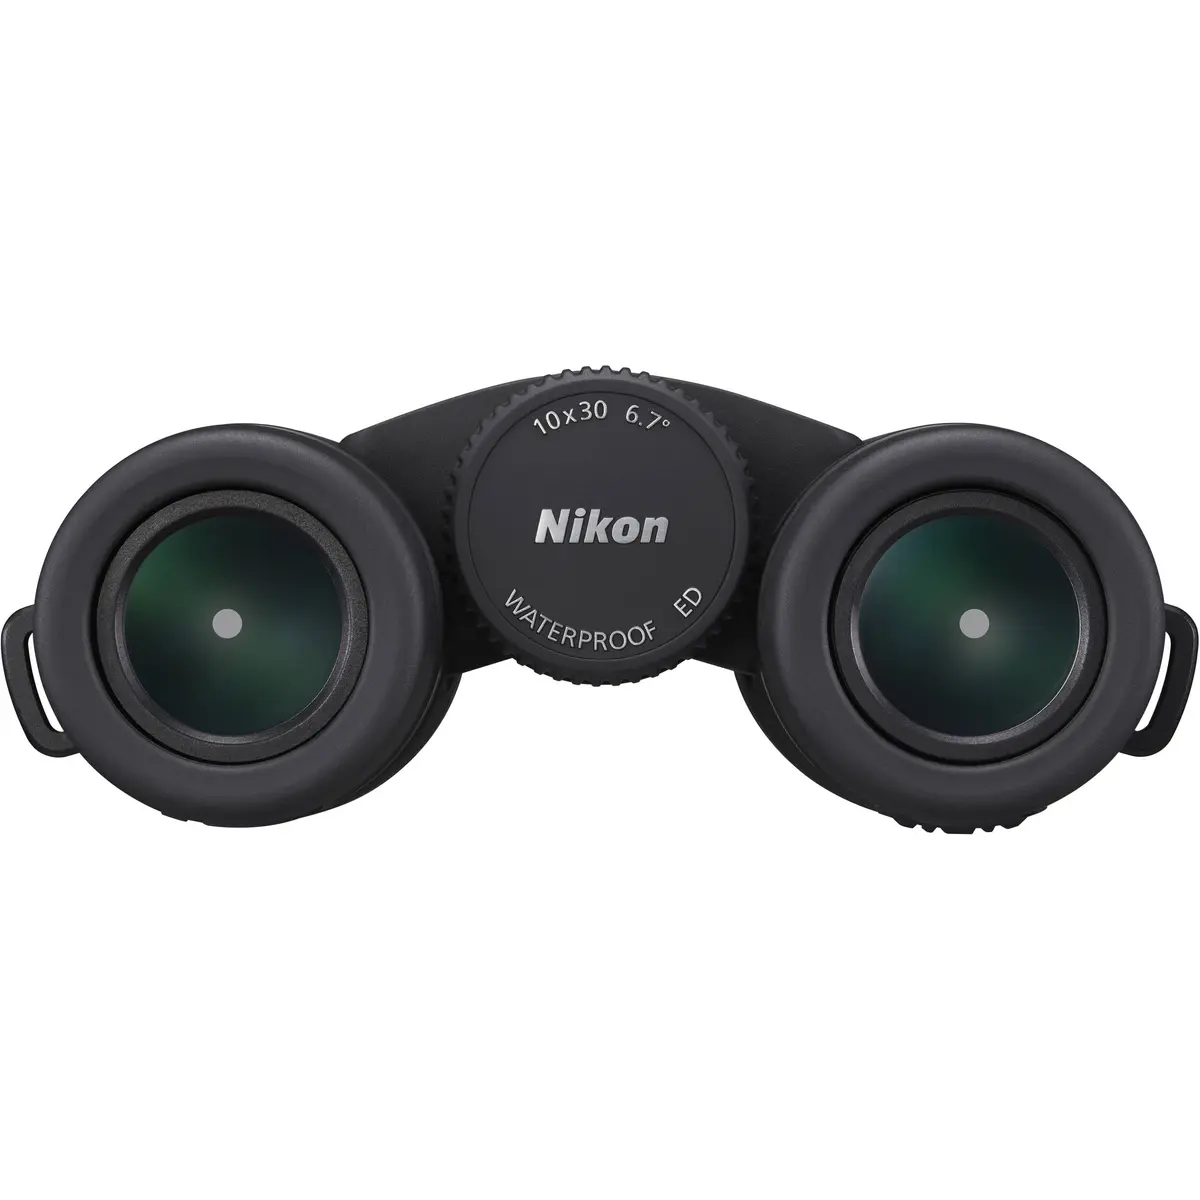 5. Nikon MONARCH M7 10 x 30 Binoculars